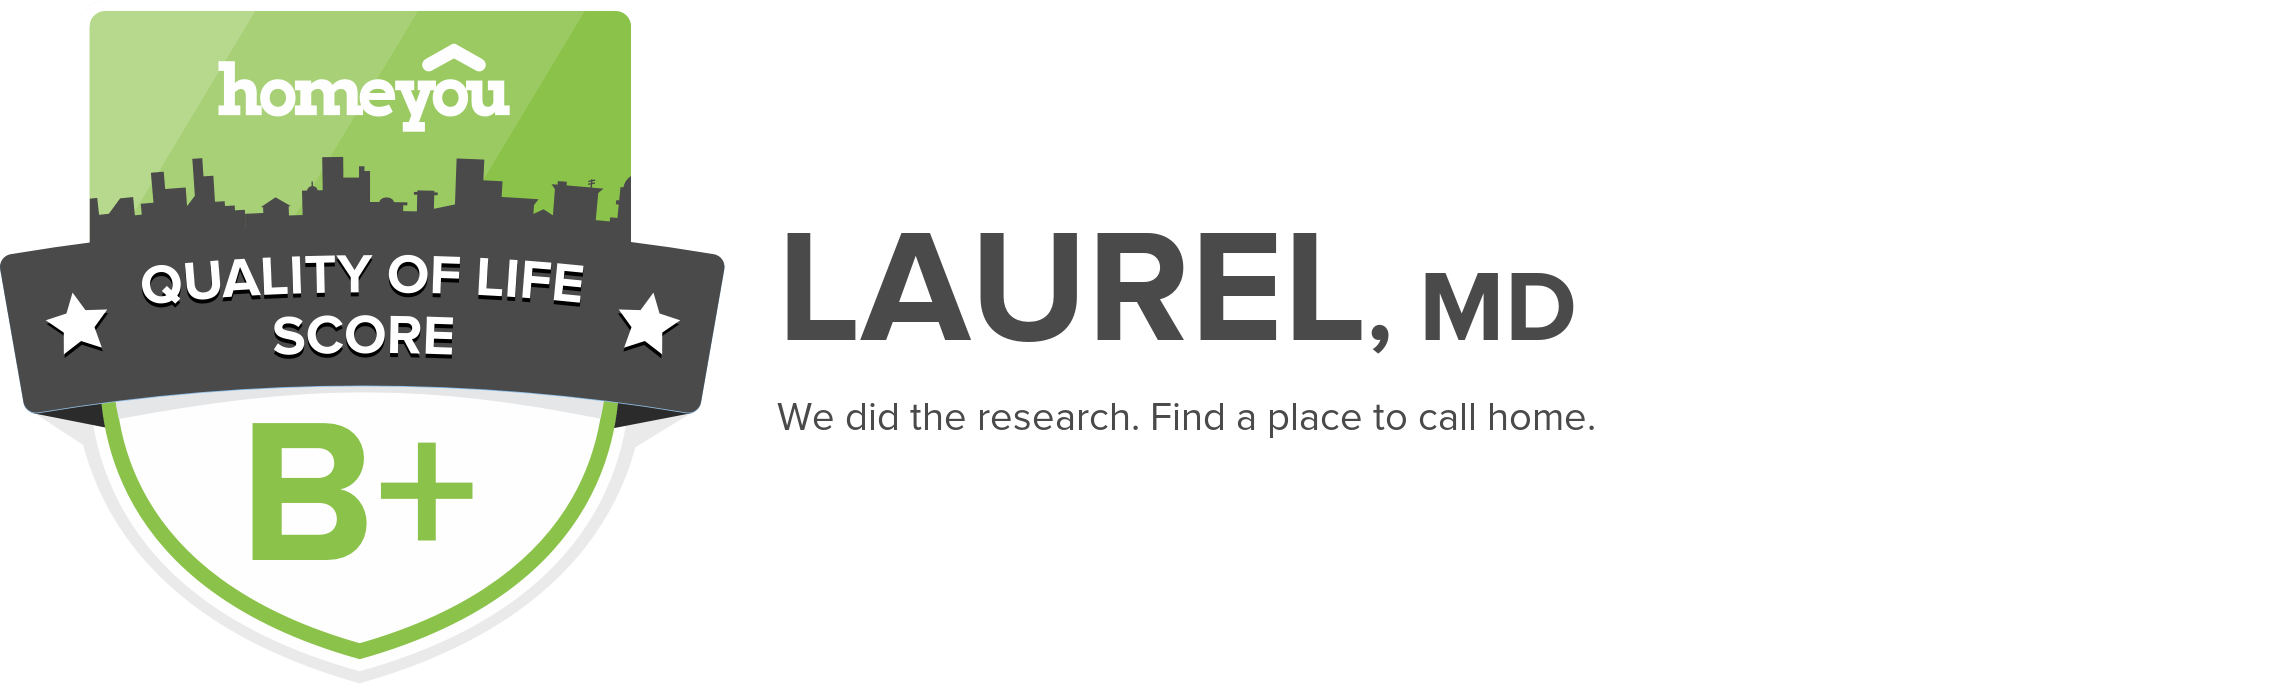 Laurel, MD